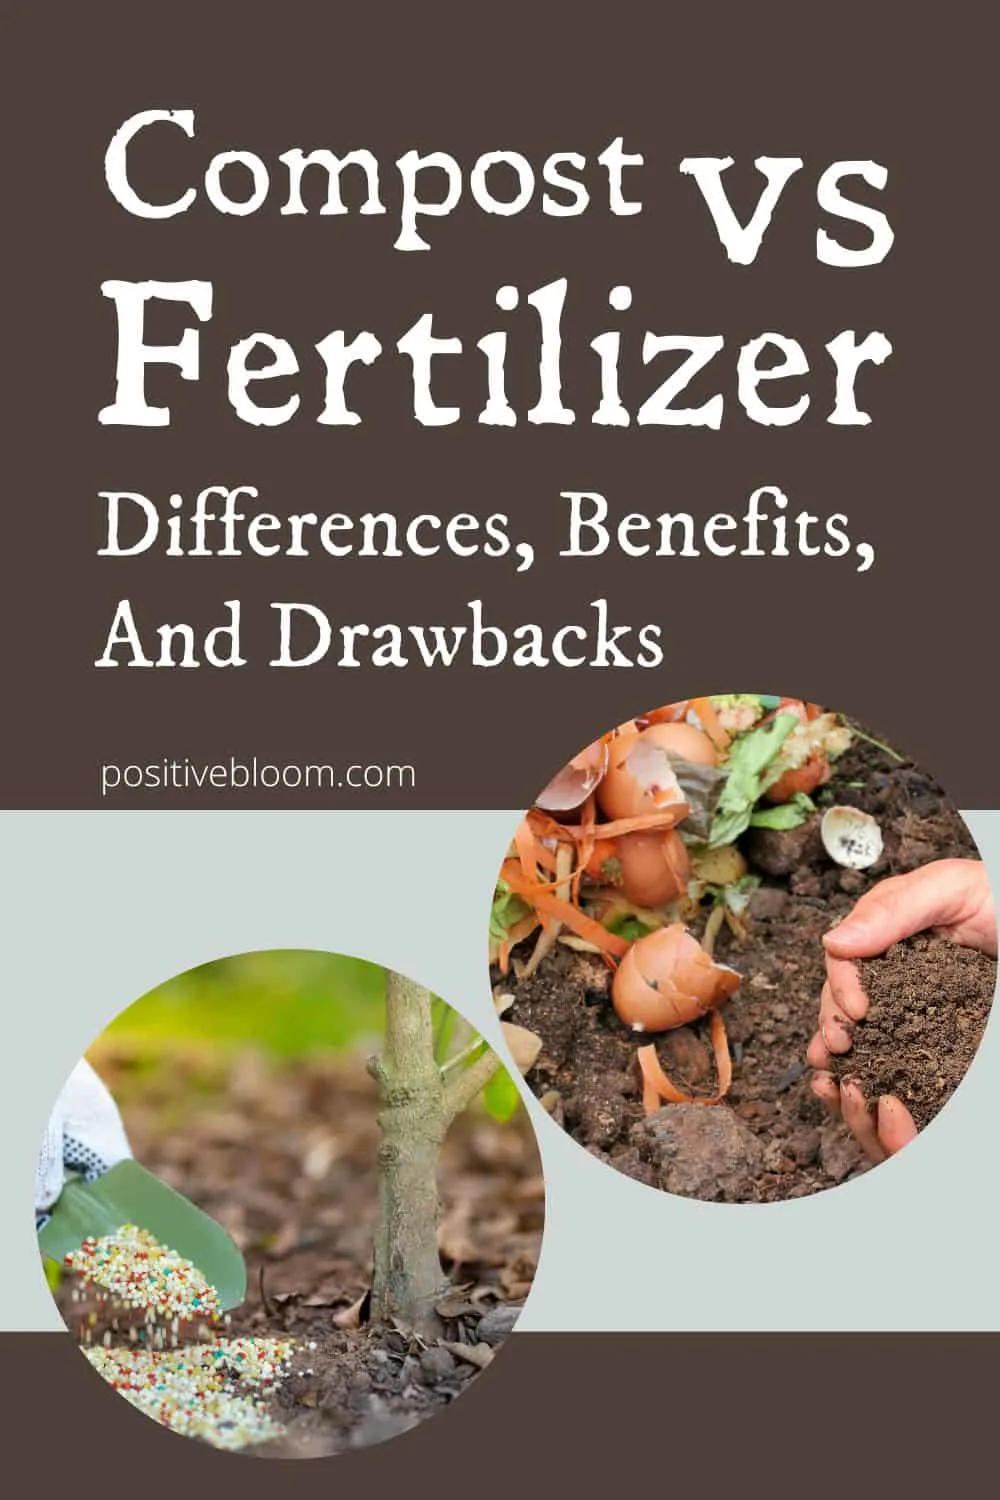 Compost vs Fertilizer Differences, Benefits, And Drawbacks Pinterest